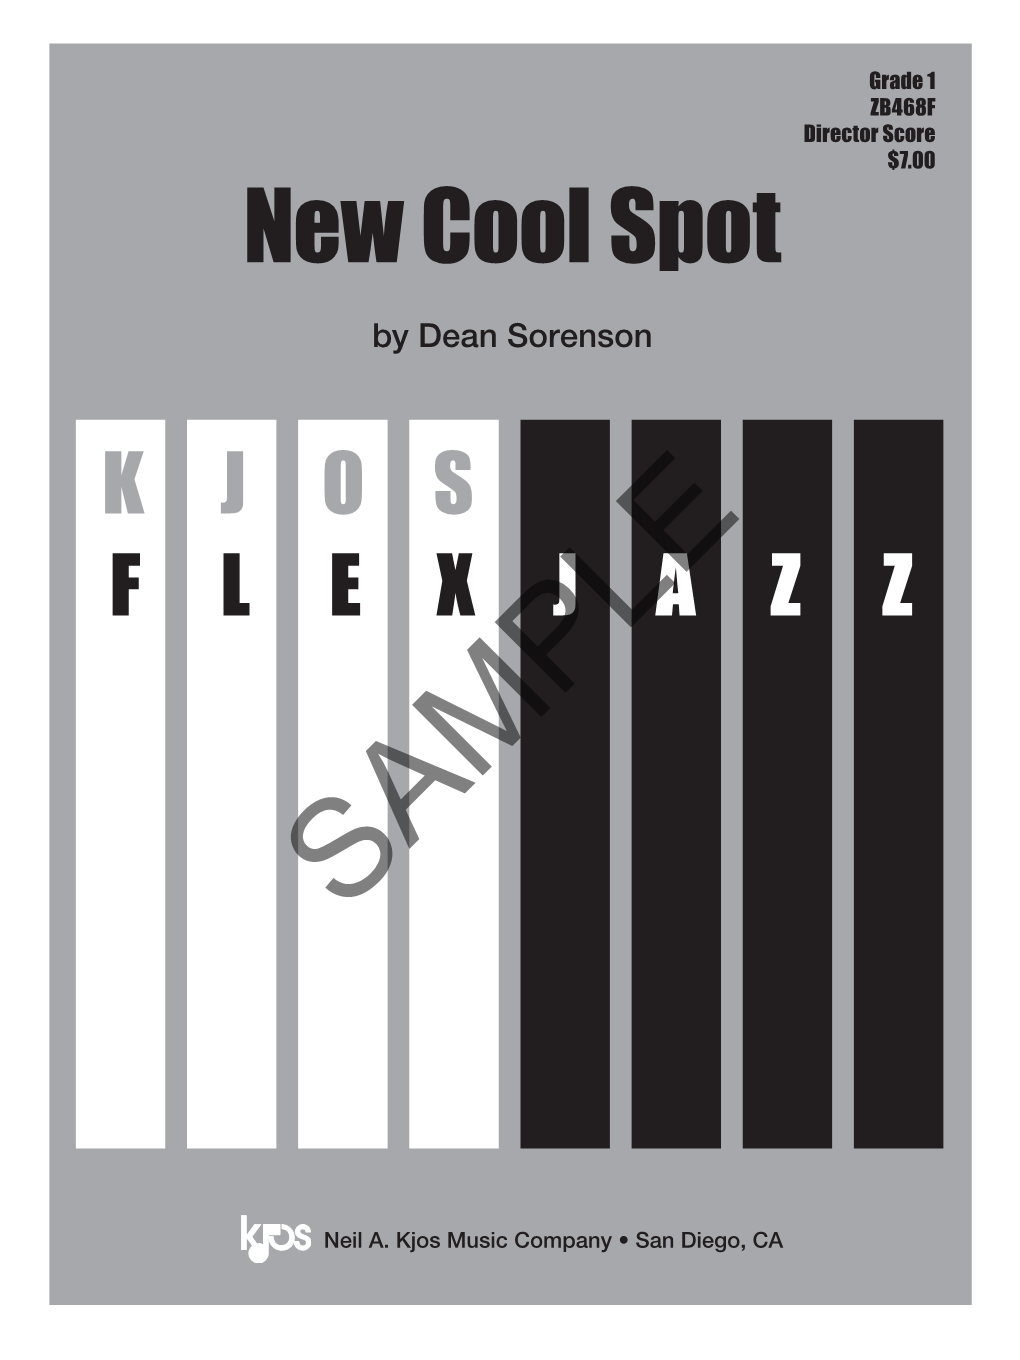 New Cool Spot by Dean Sorenson